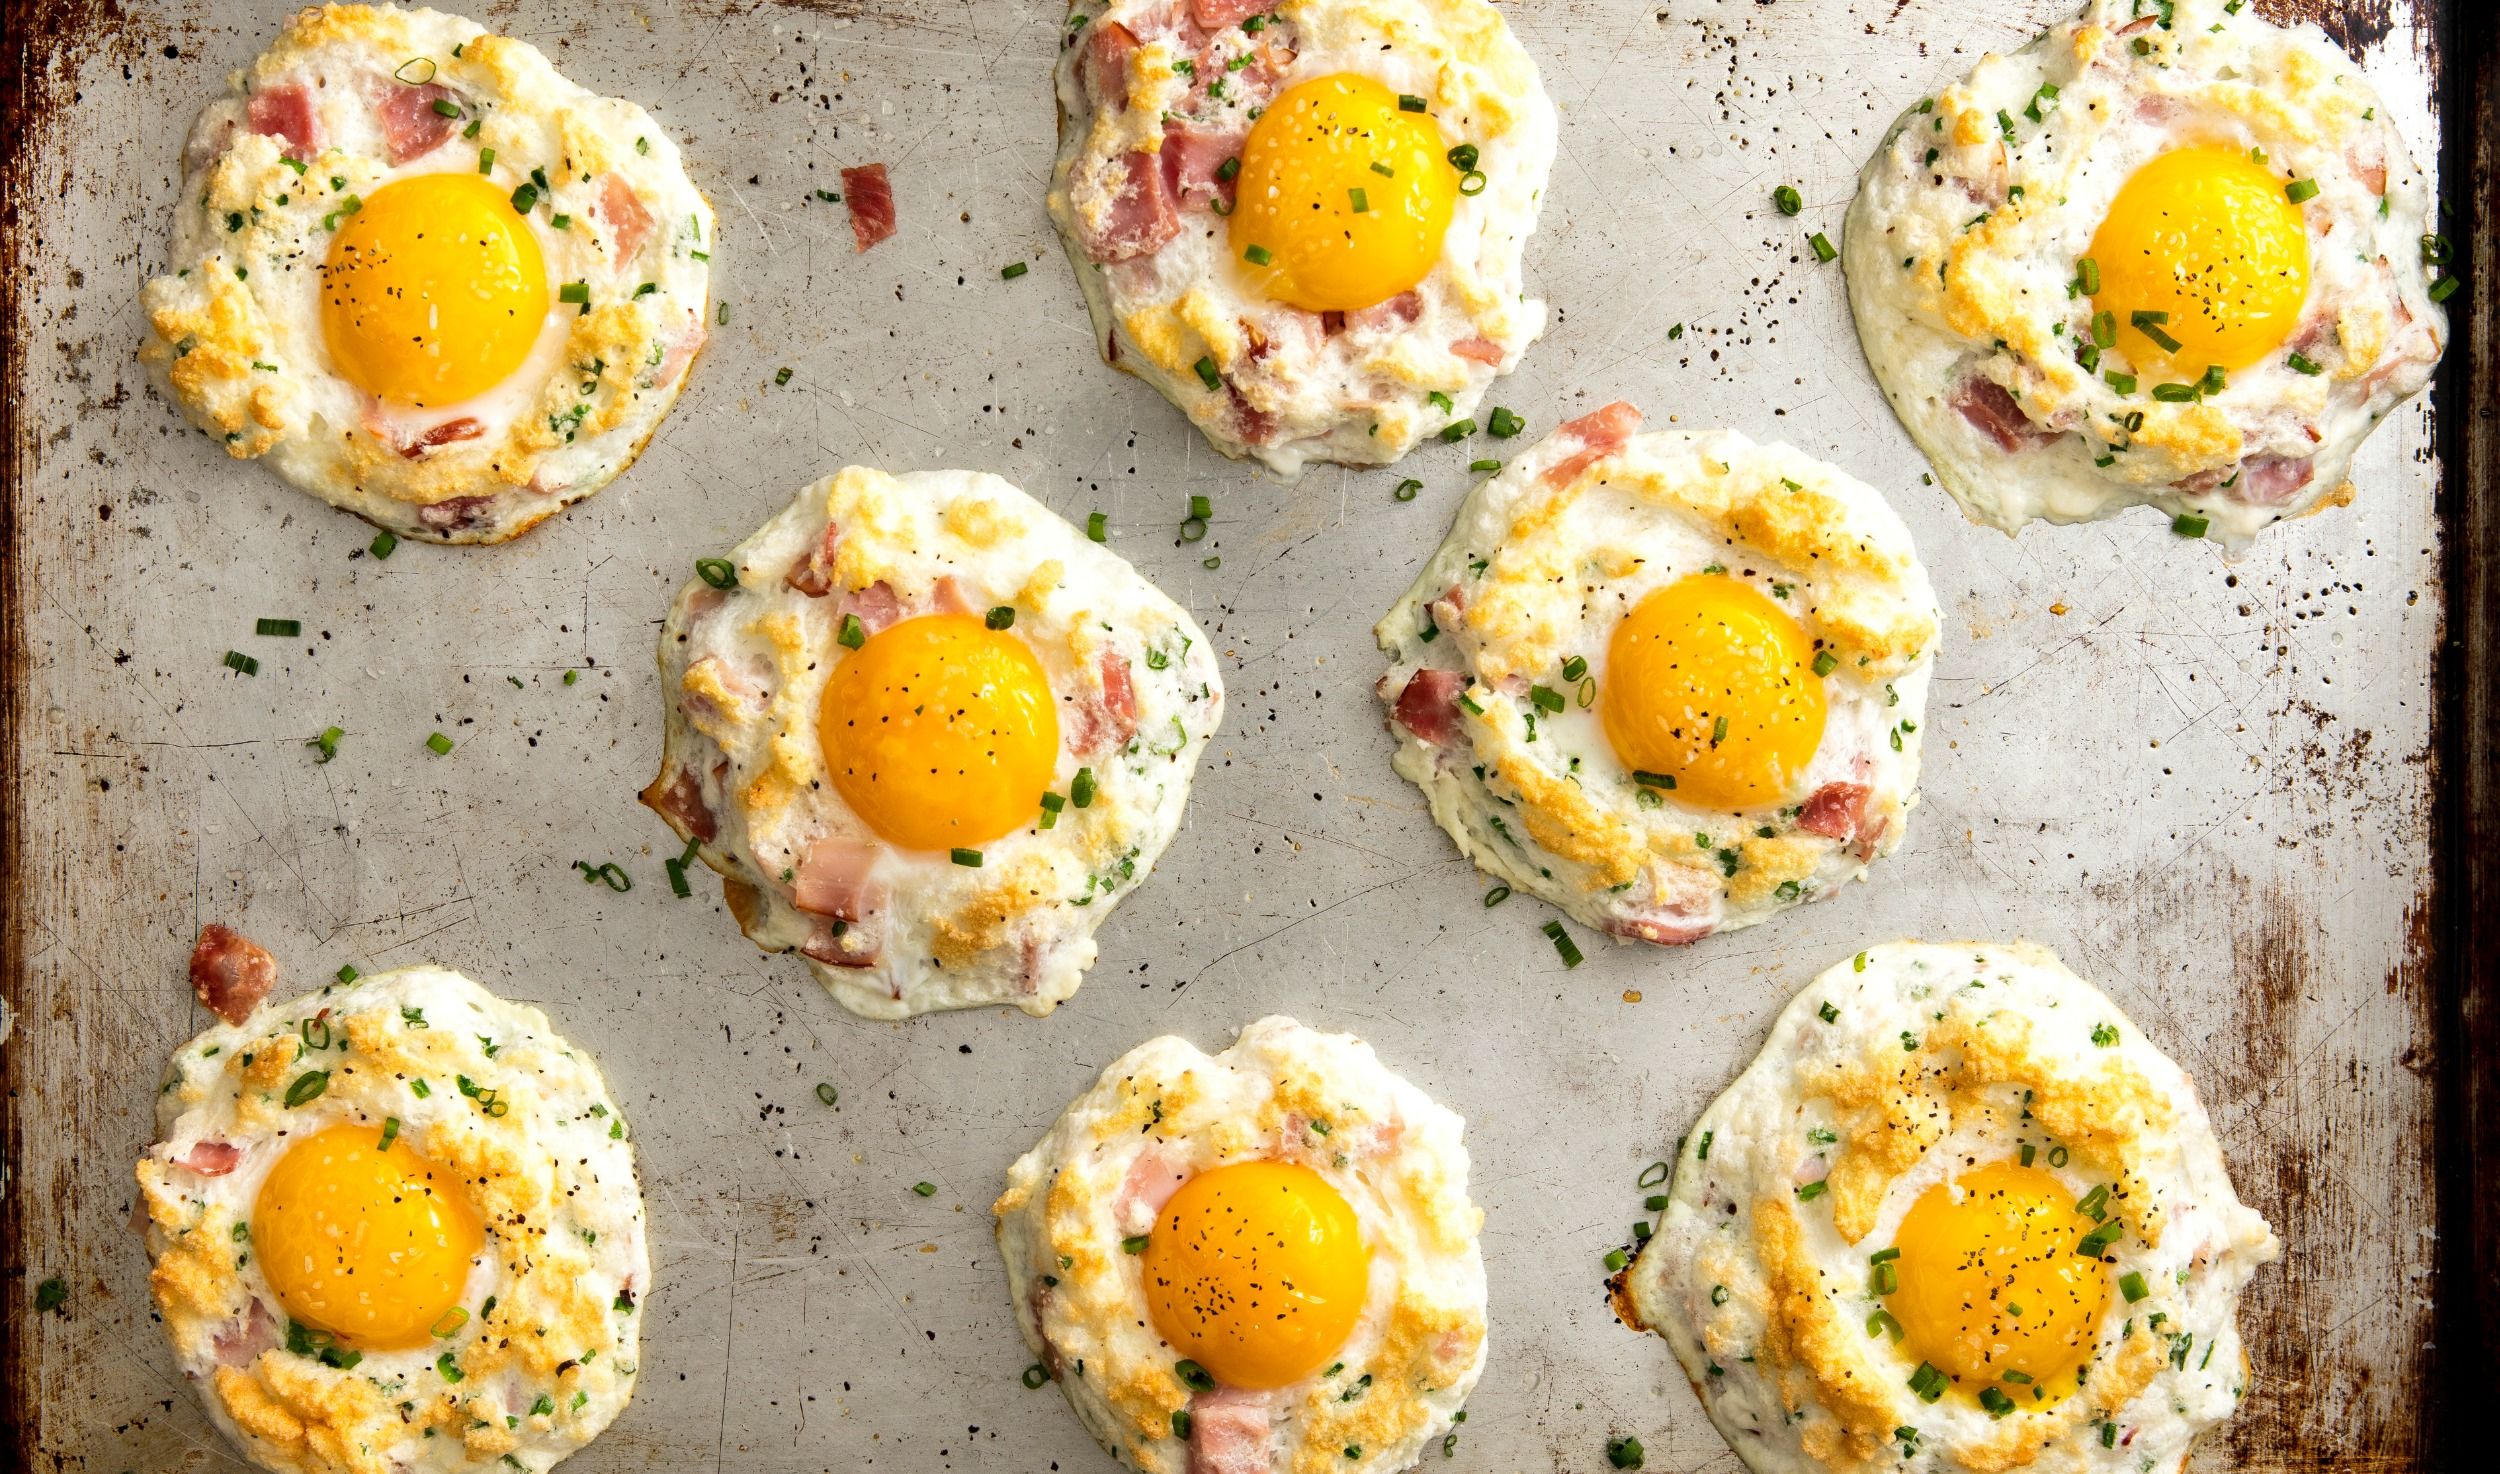 Best Cloud Eggs Recipe - How to Make Cloud Eggs